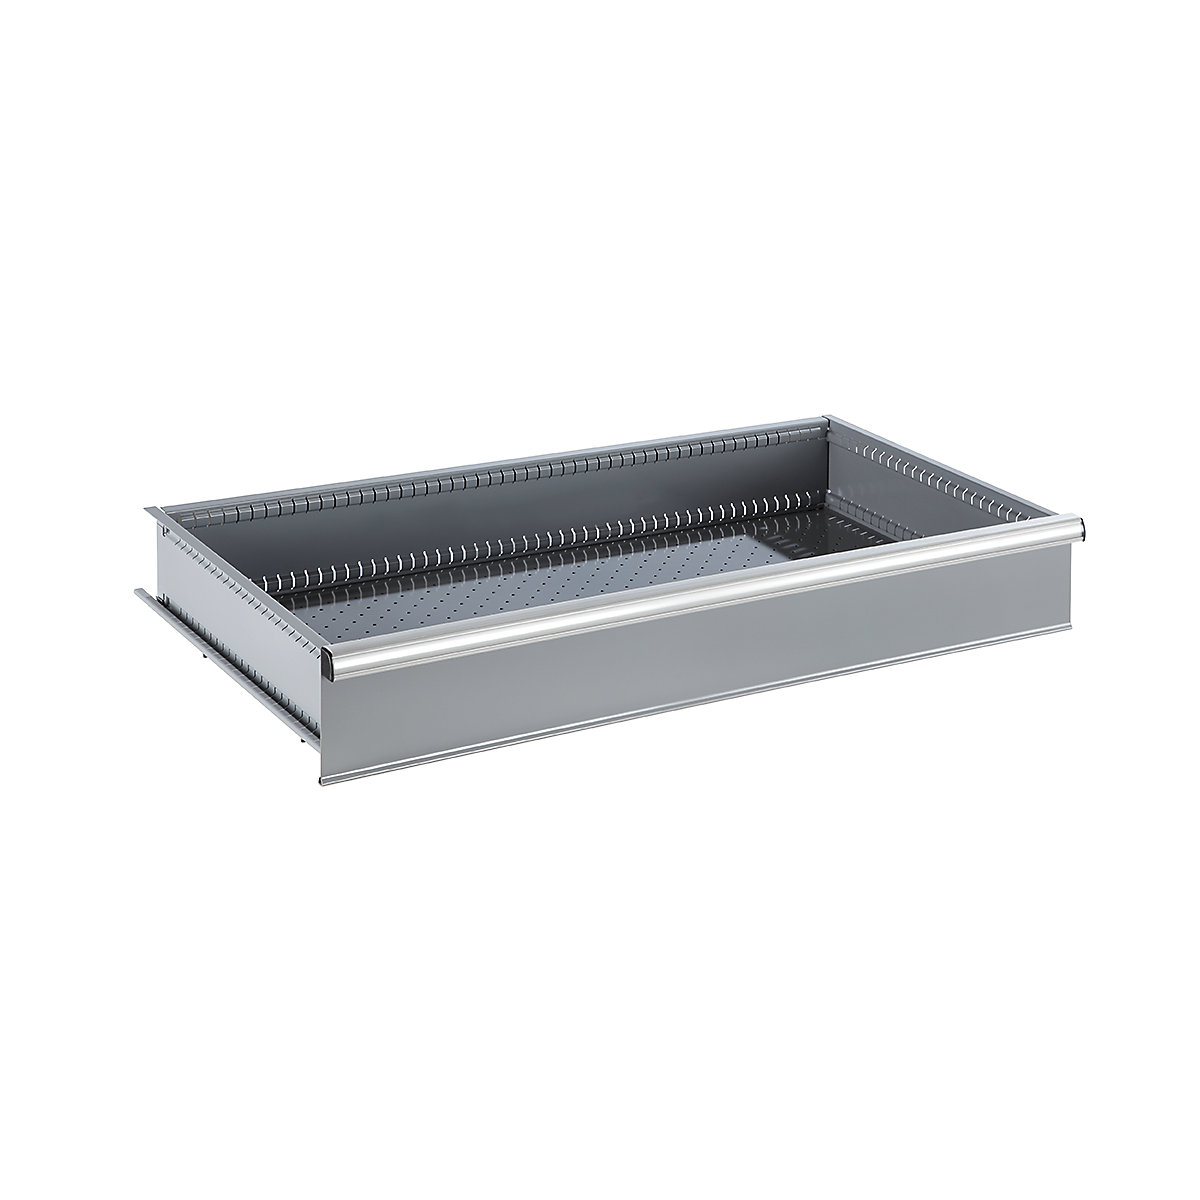 Single drawer – LISTA, WxD 918 x 459 mm, grey, height 132.5 mm-3